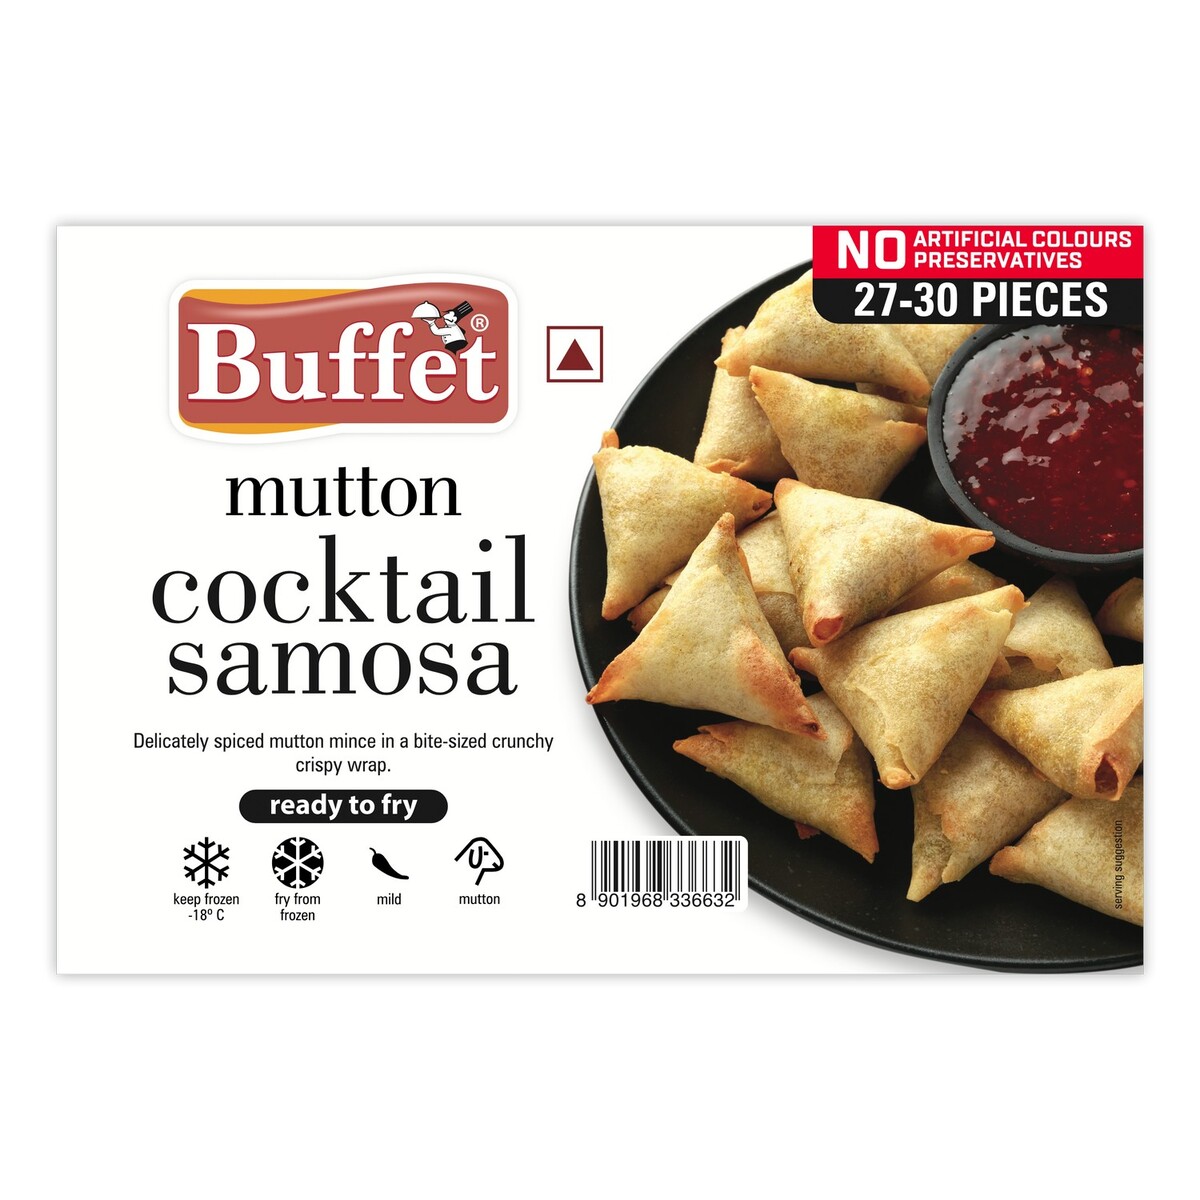 Buffet Mutton Cocktail Samosa 300g